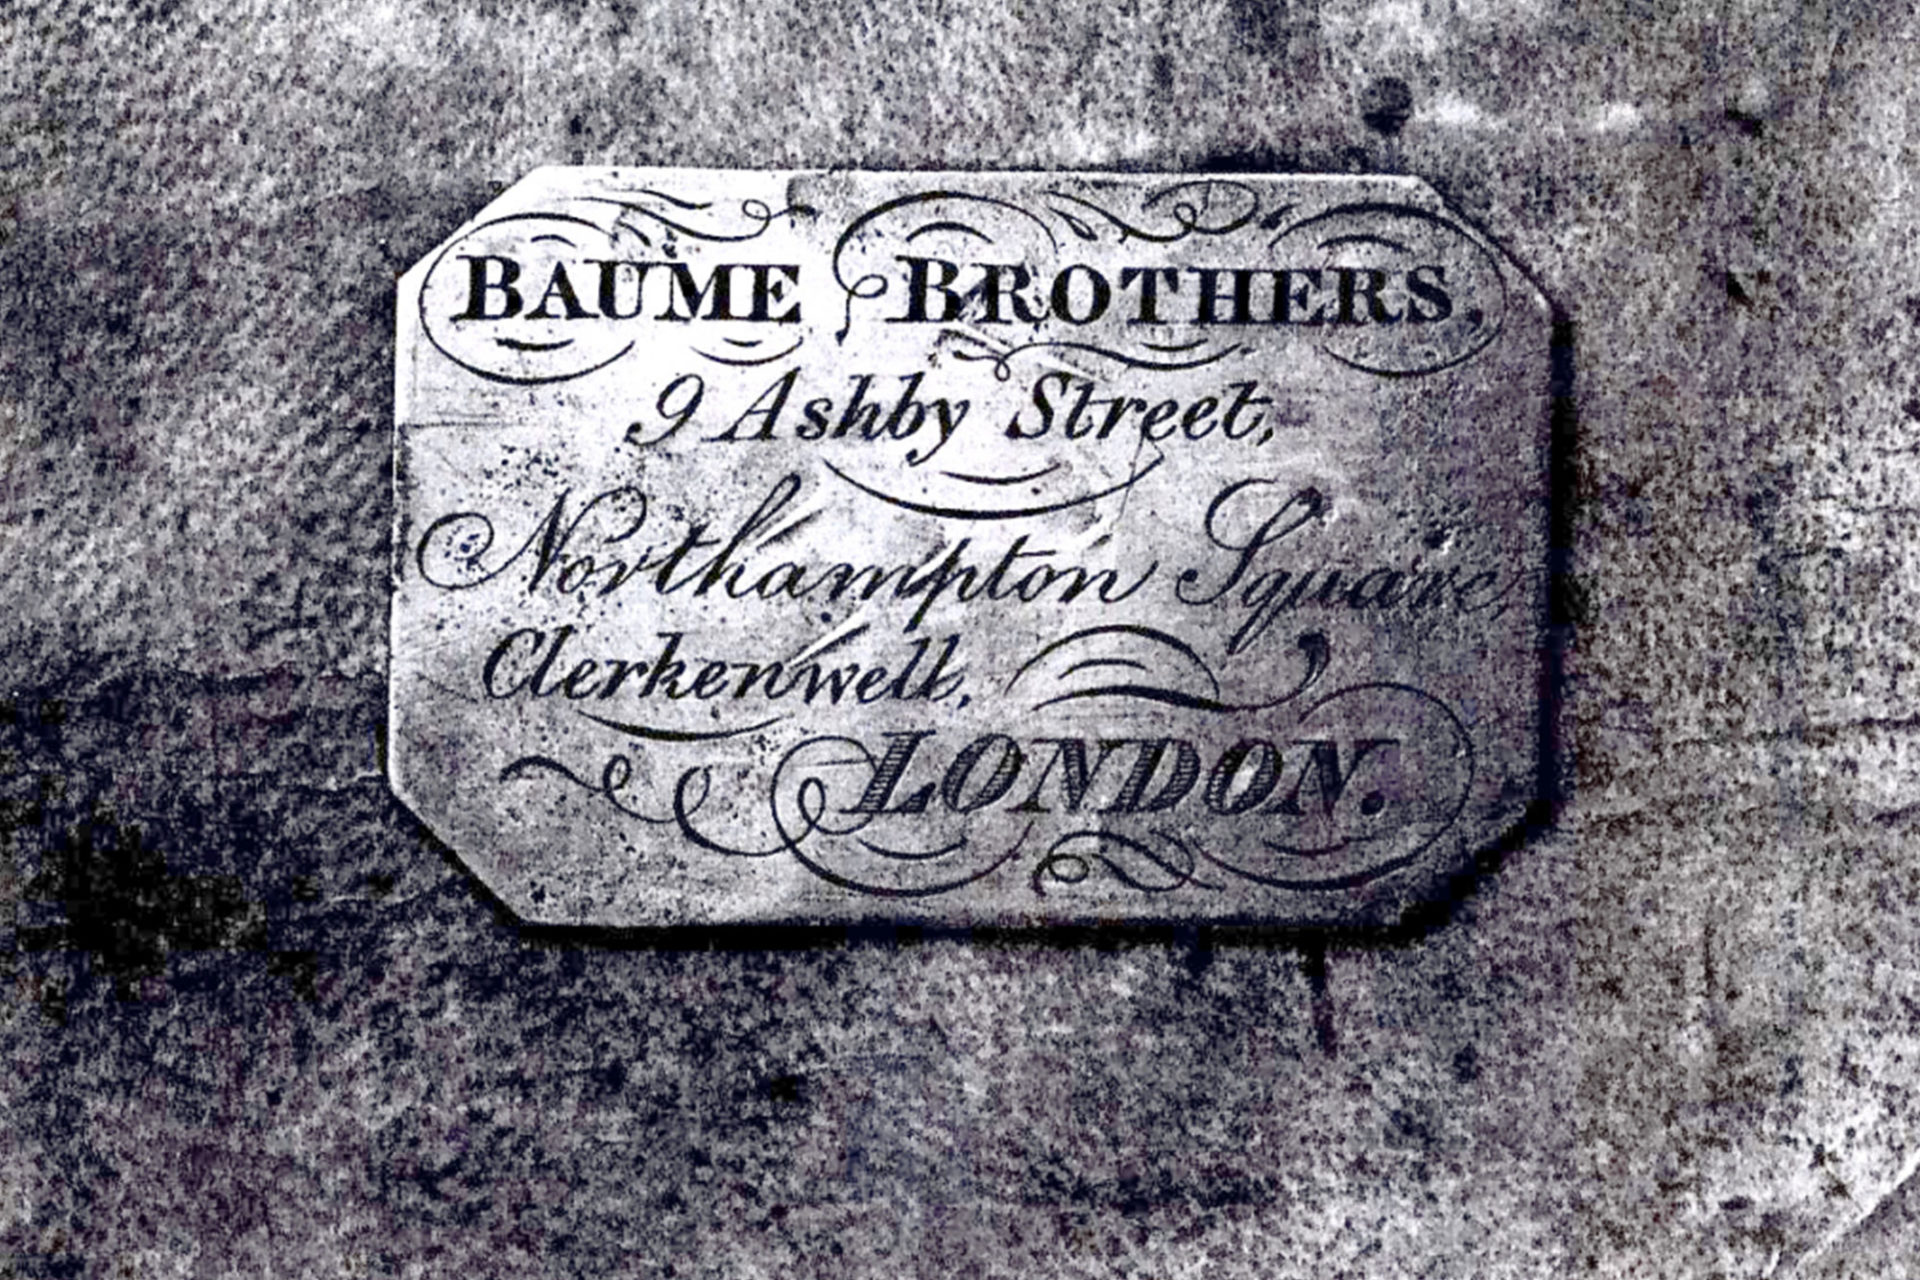 Baume & Mercier - Histoire - Baume Brothers London